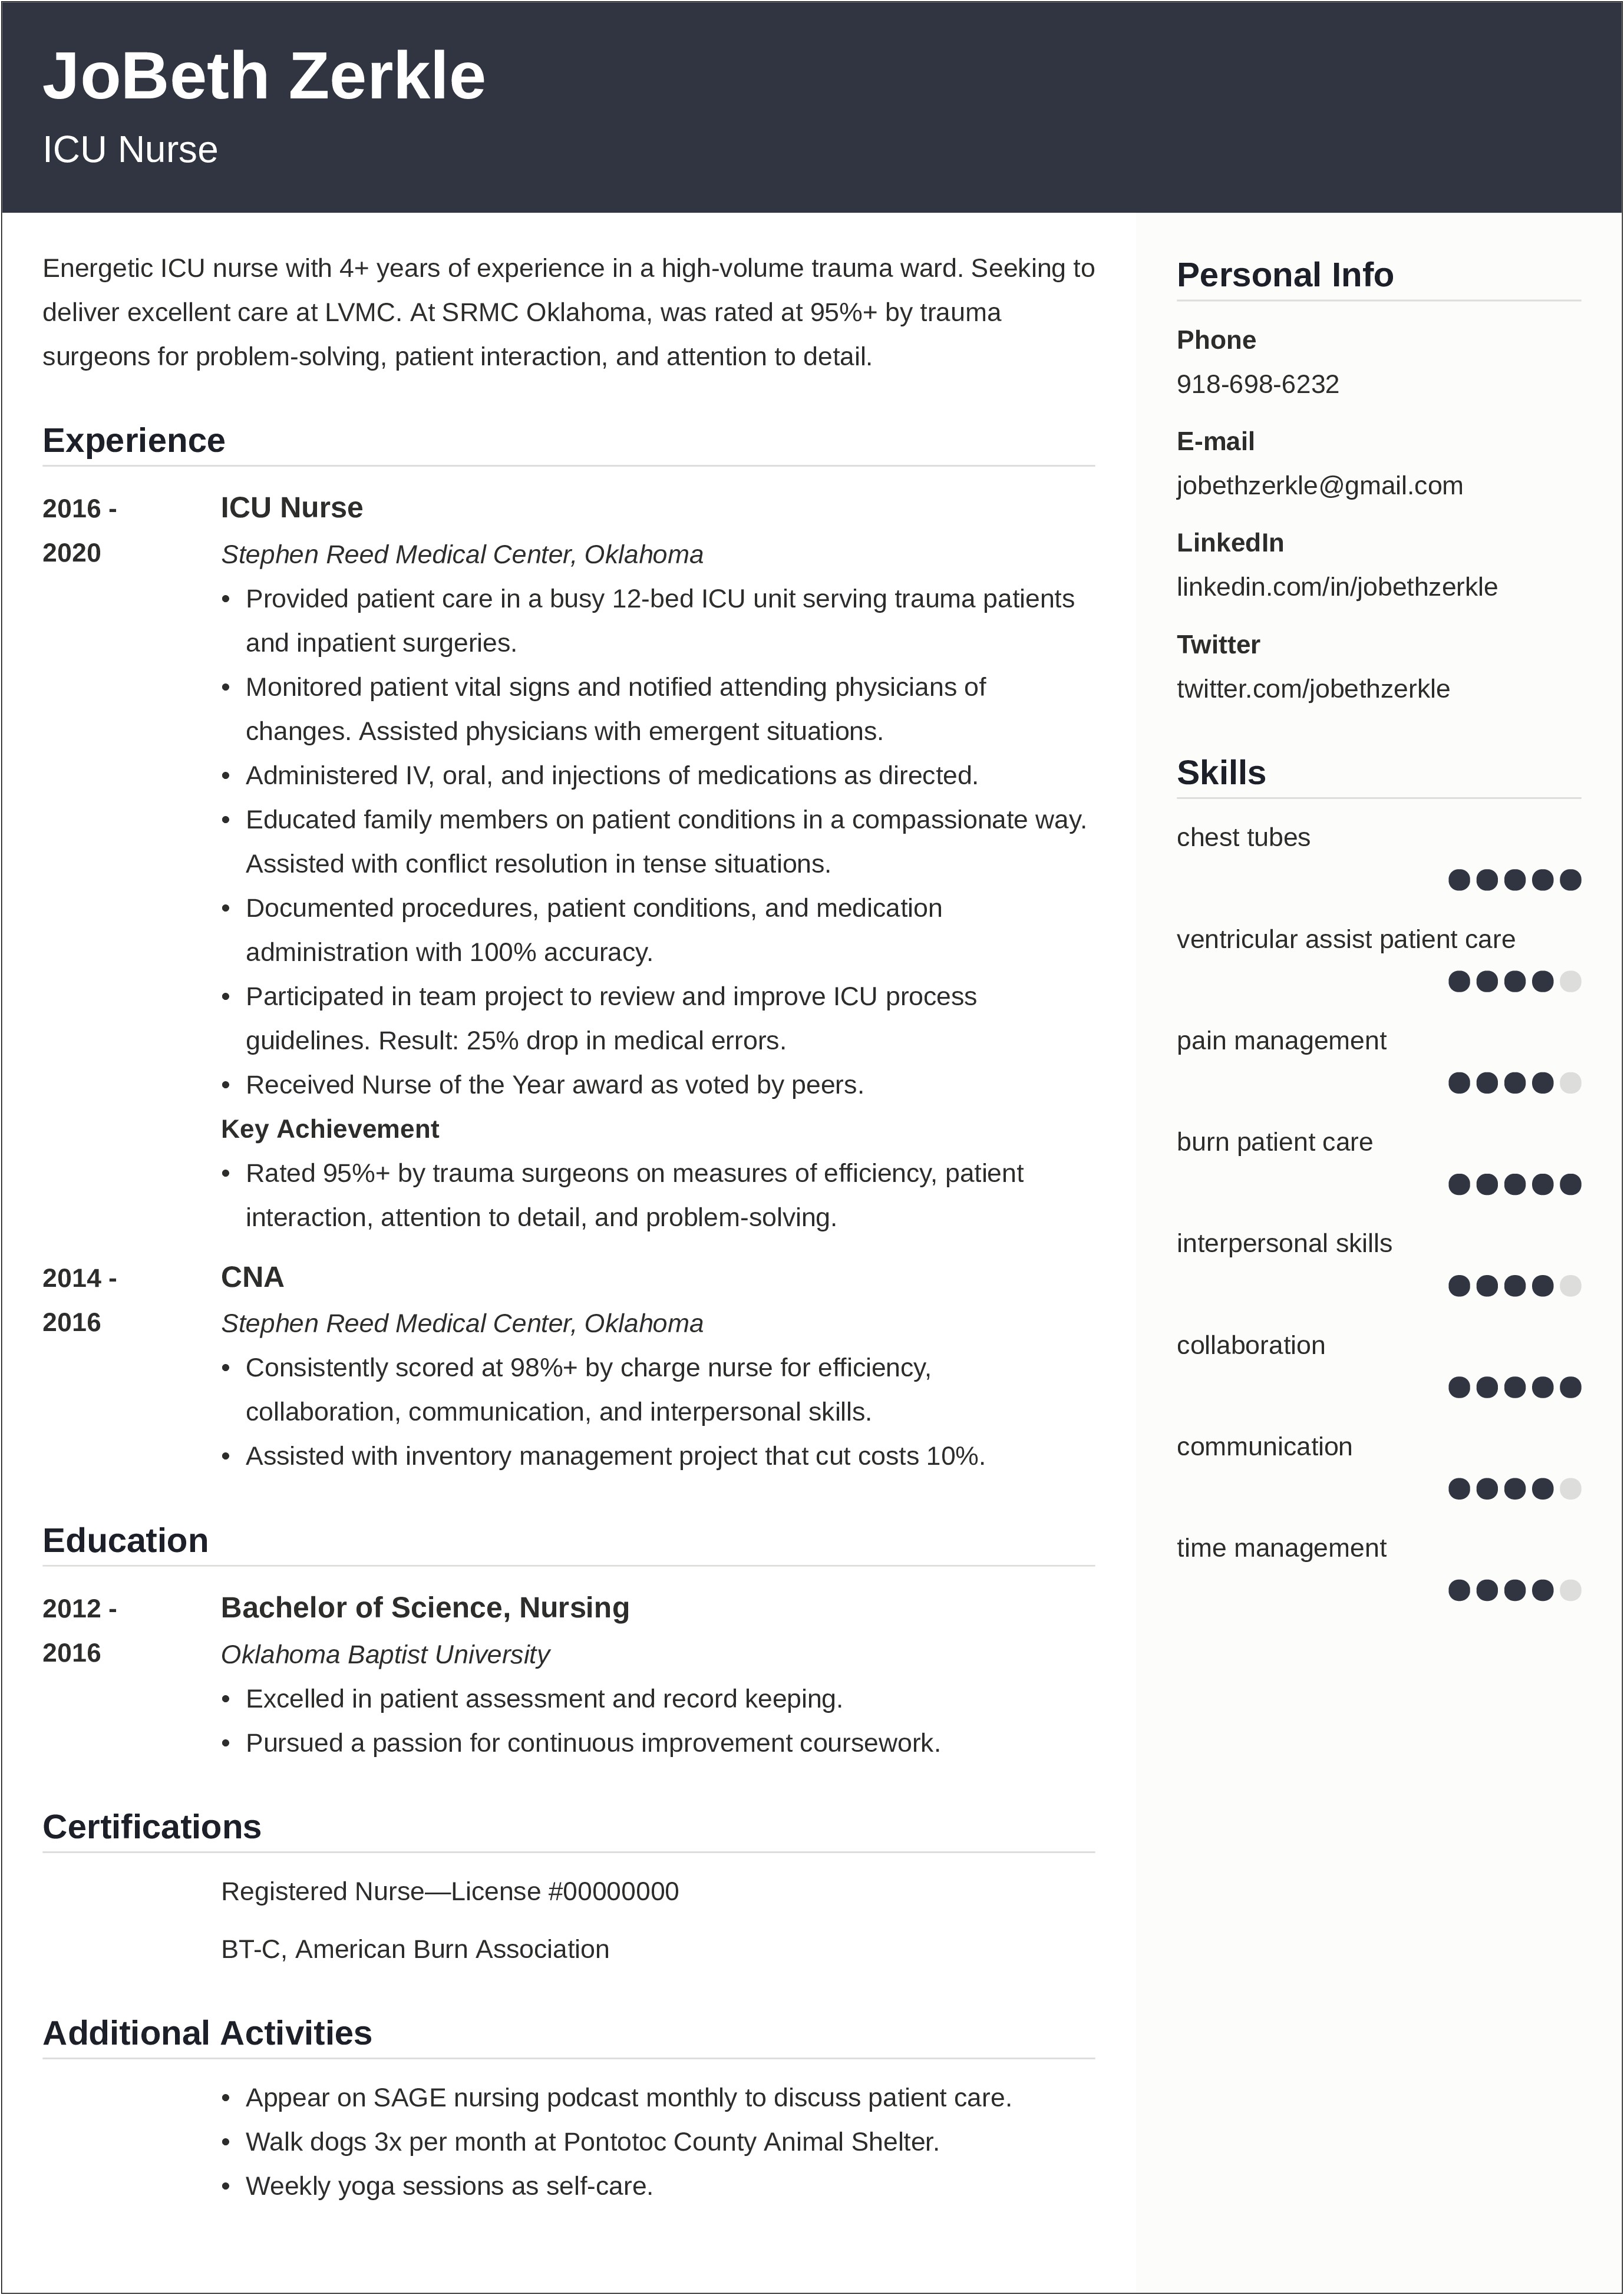 Surgical Tech Job Description For Resume